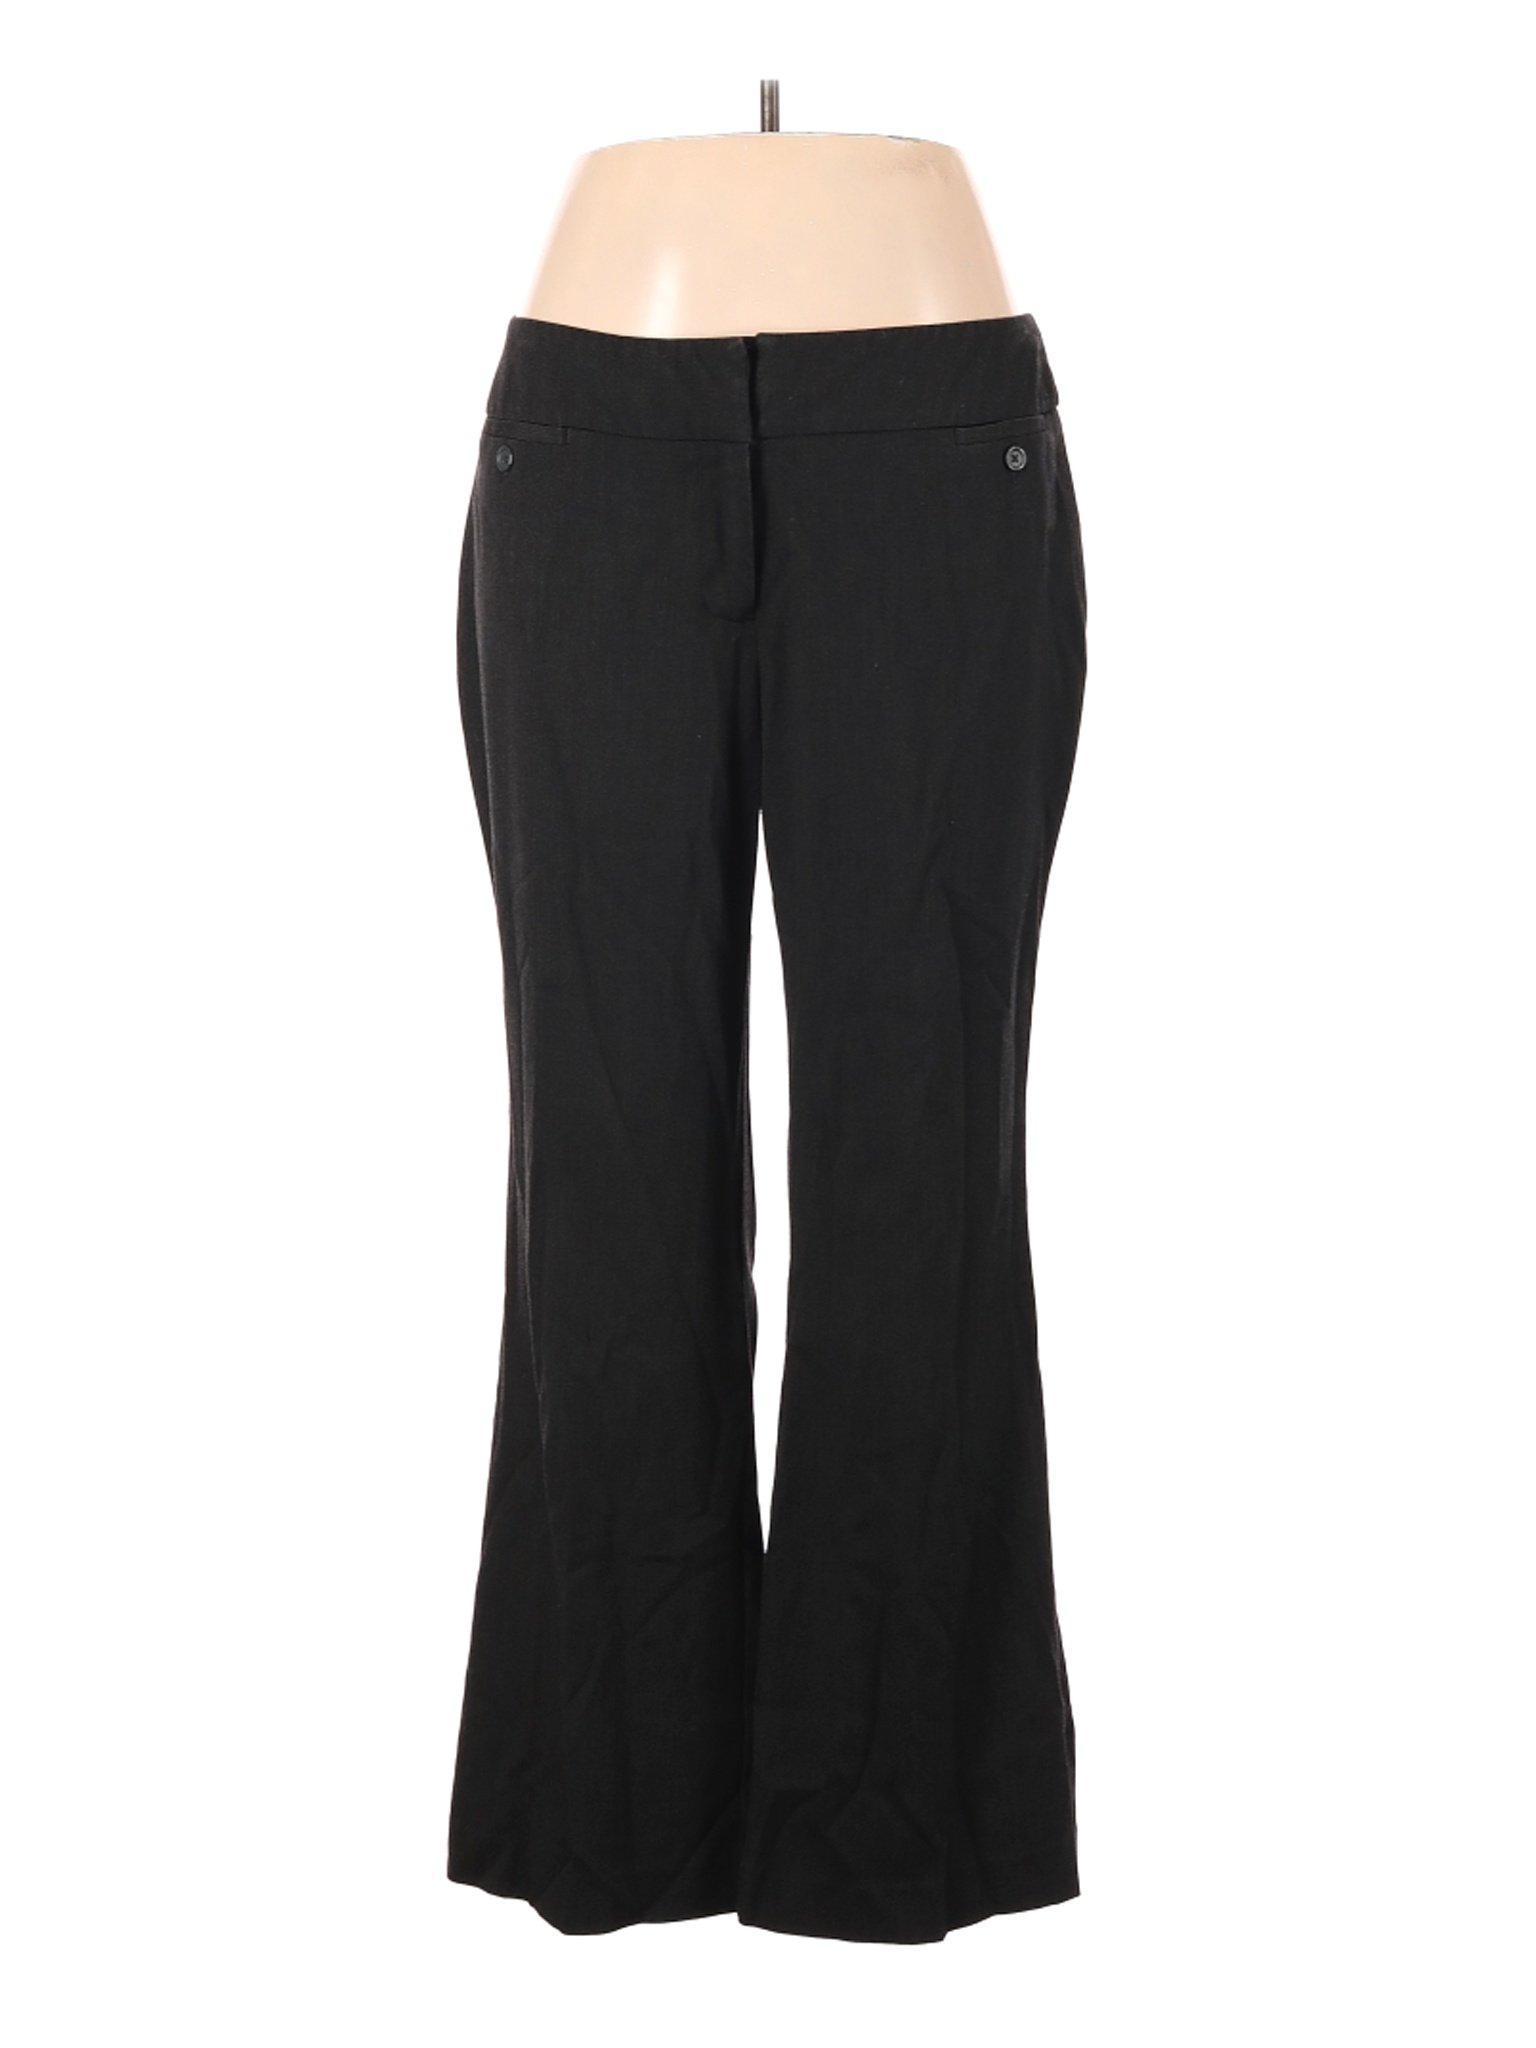 Apt. 9 Women Black Dress Pants 14 Petites | eBay